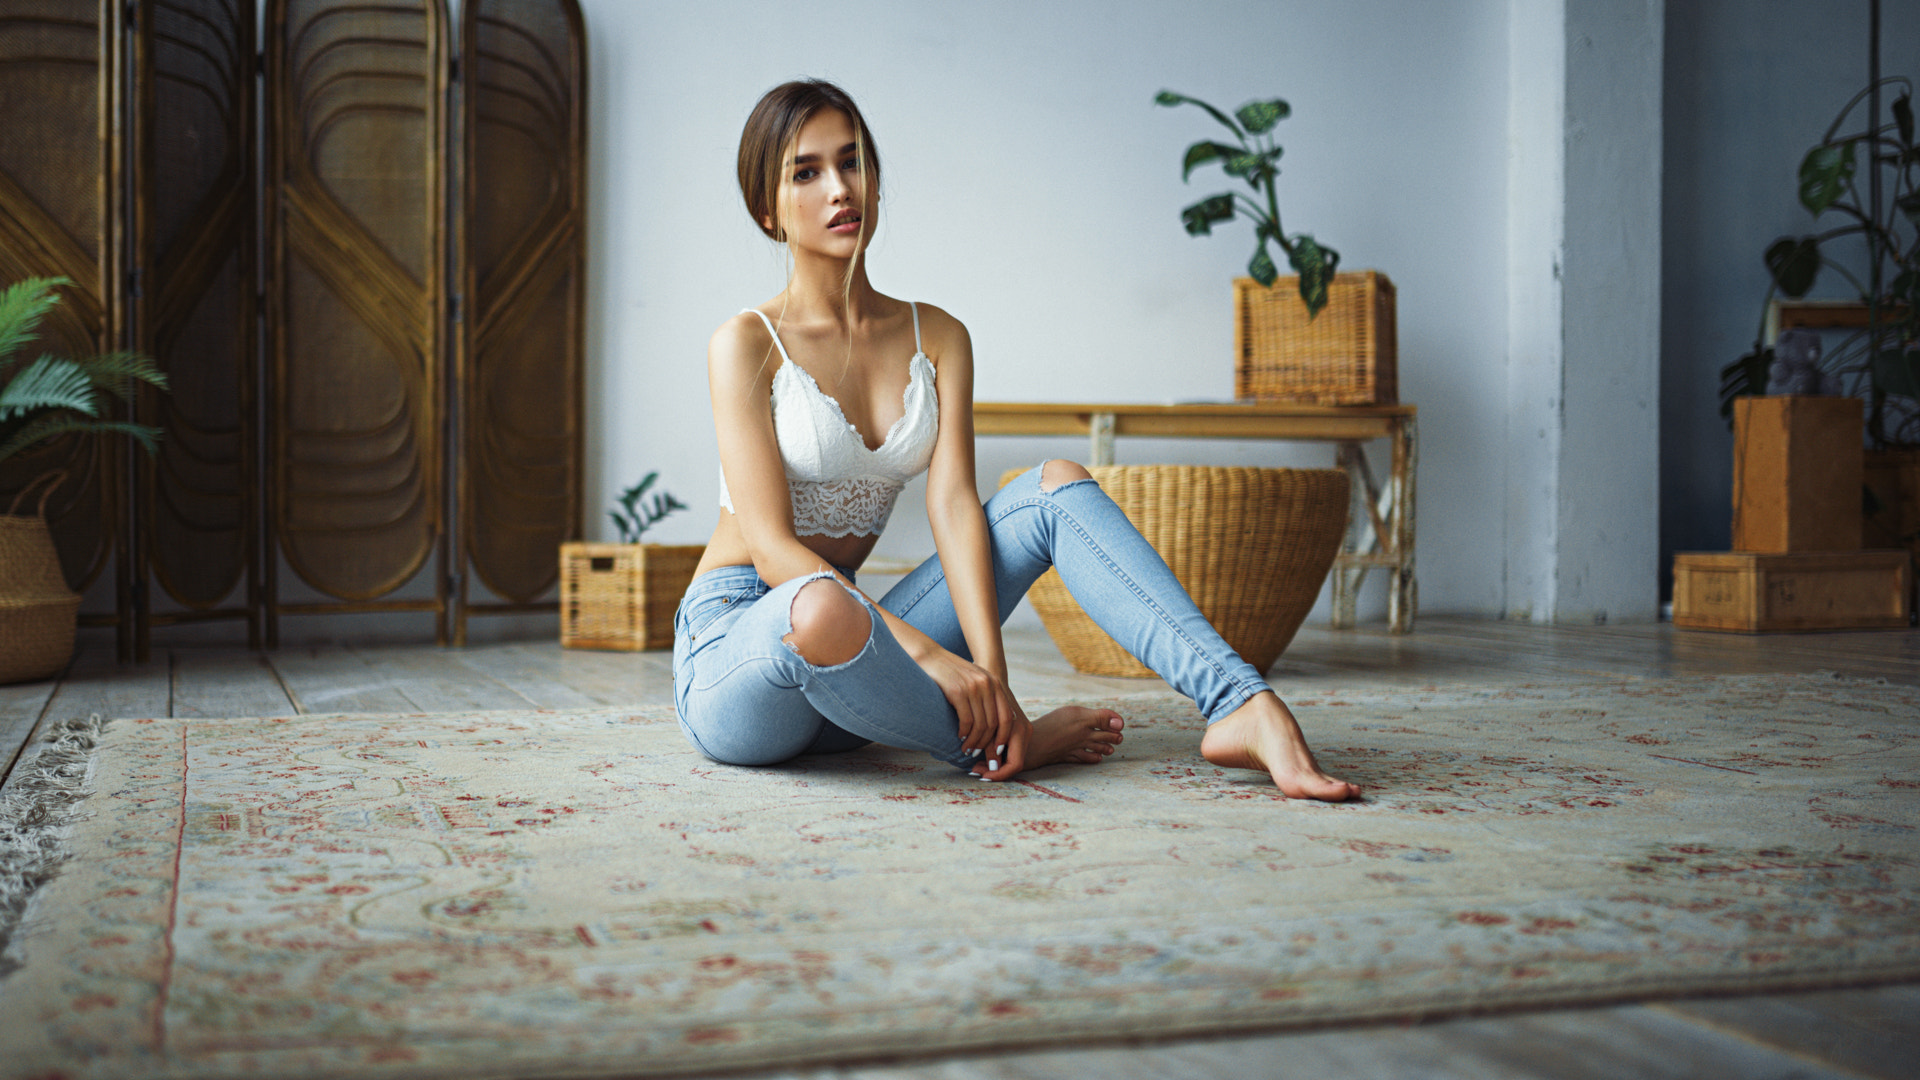 Anastasia Lis Sergey Fat Torn Jeans Brunette Plants Sitting White Tops Women Barefoot 1920x1080